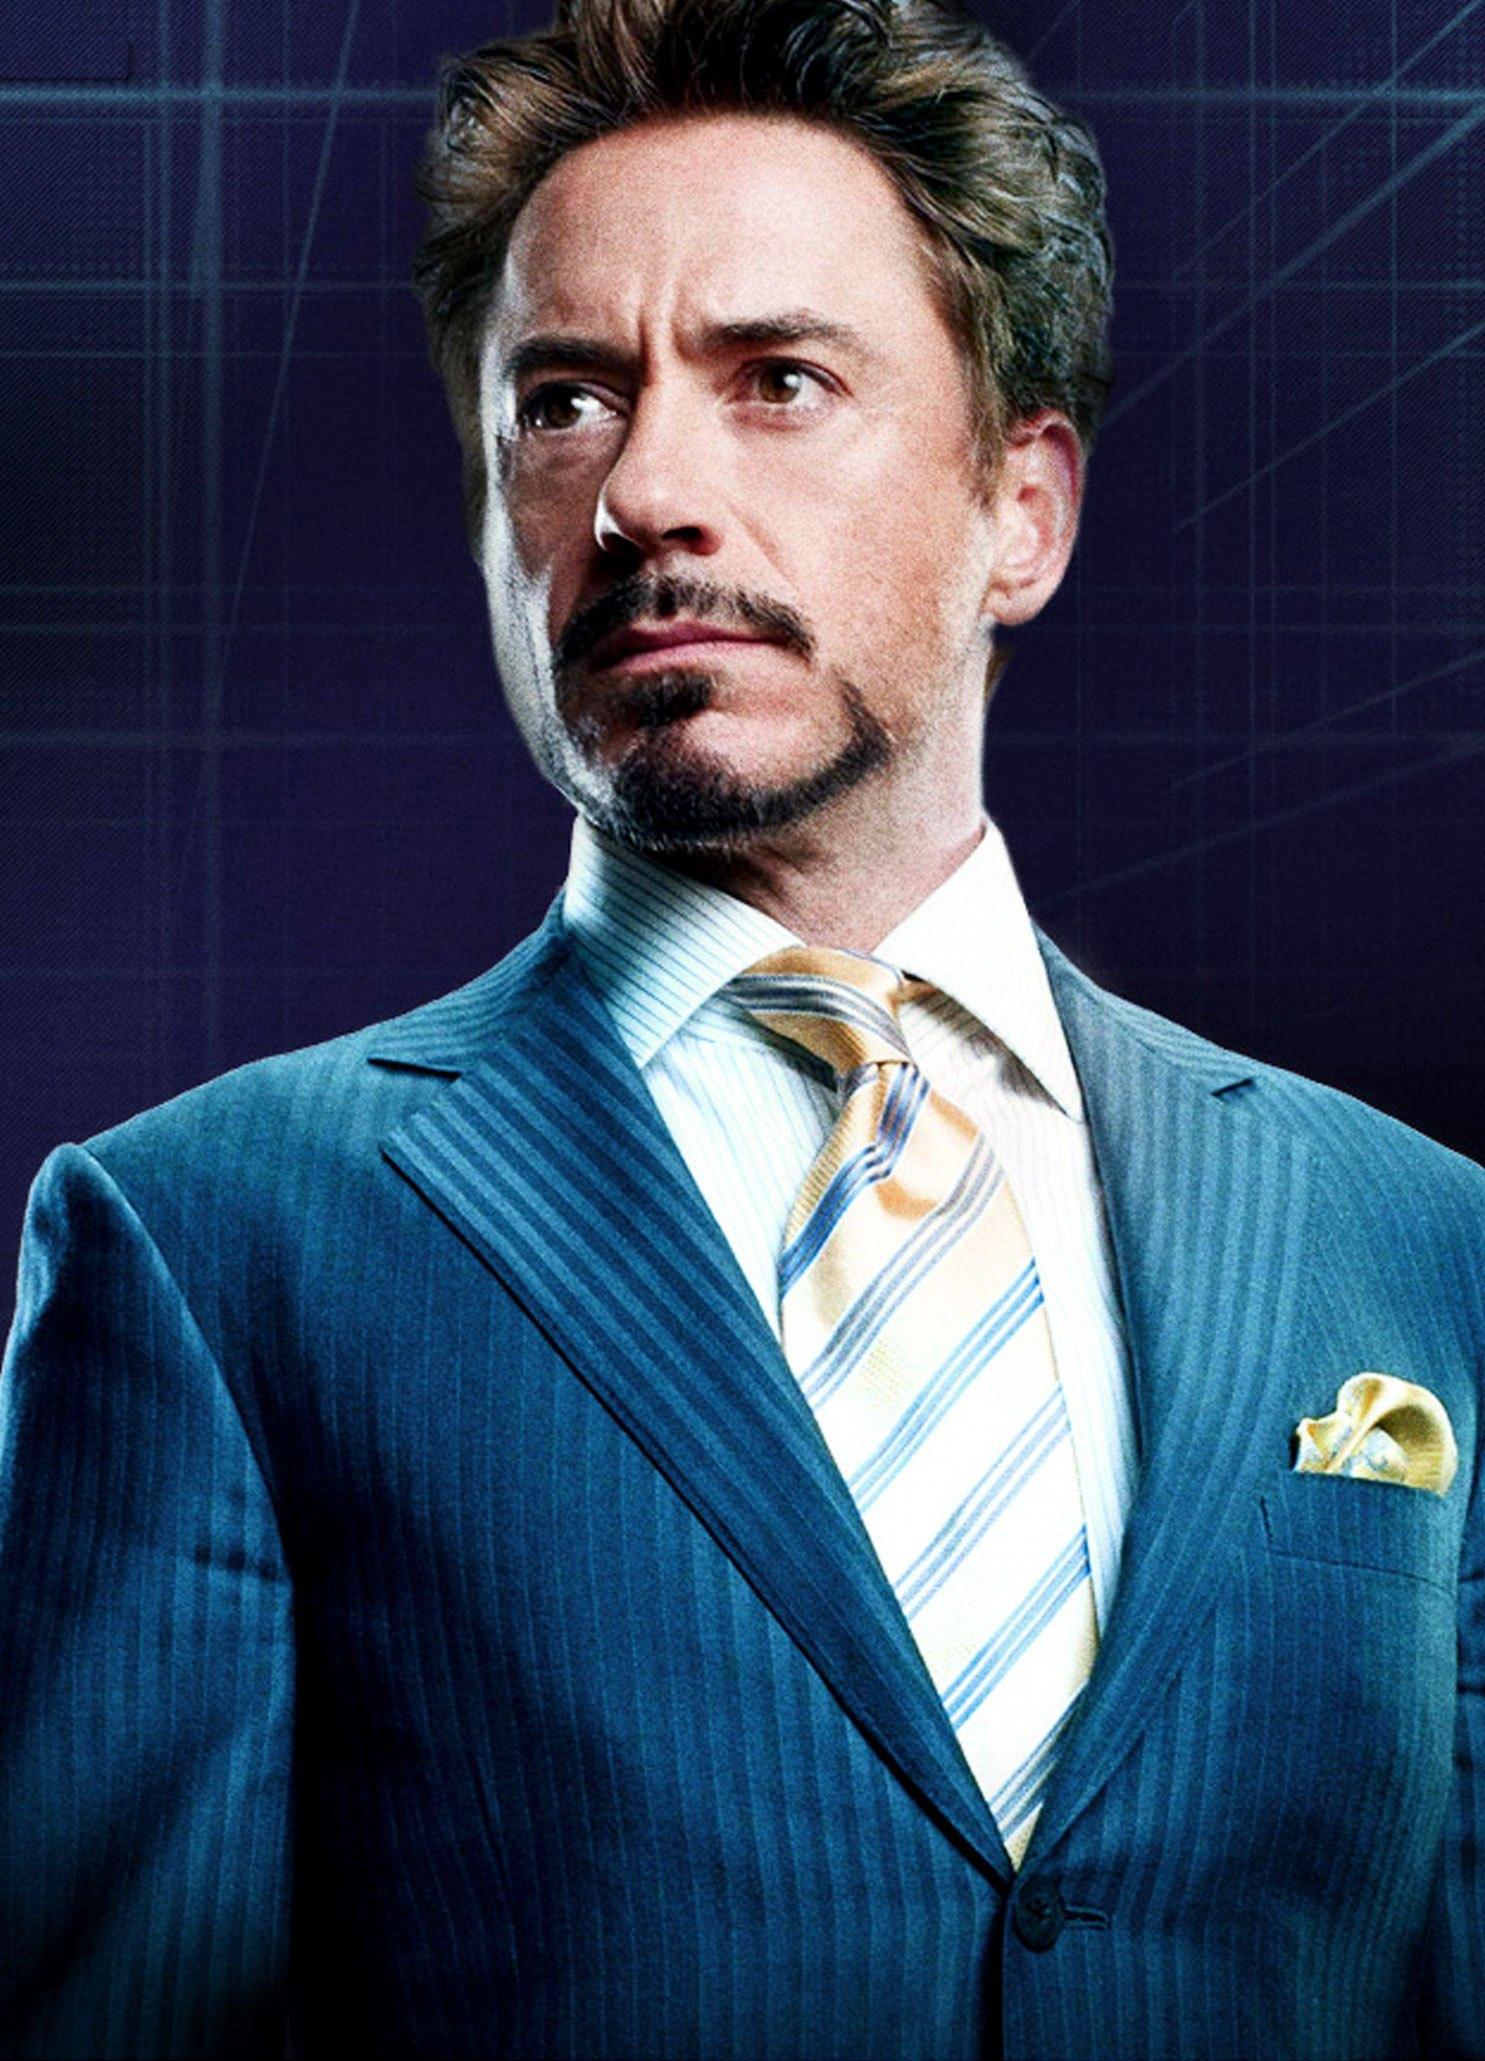 Tony Stark Halloween Costume & Picture Of You As Tony Stark